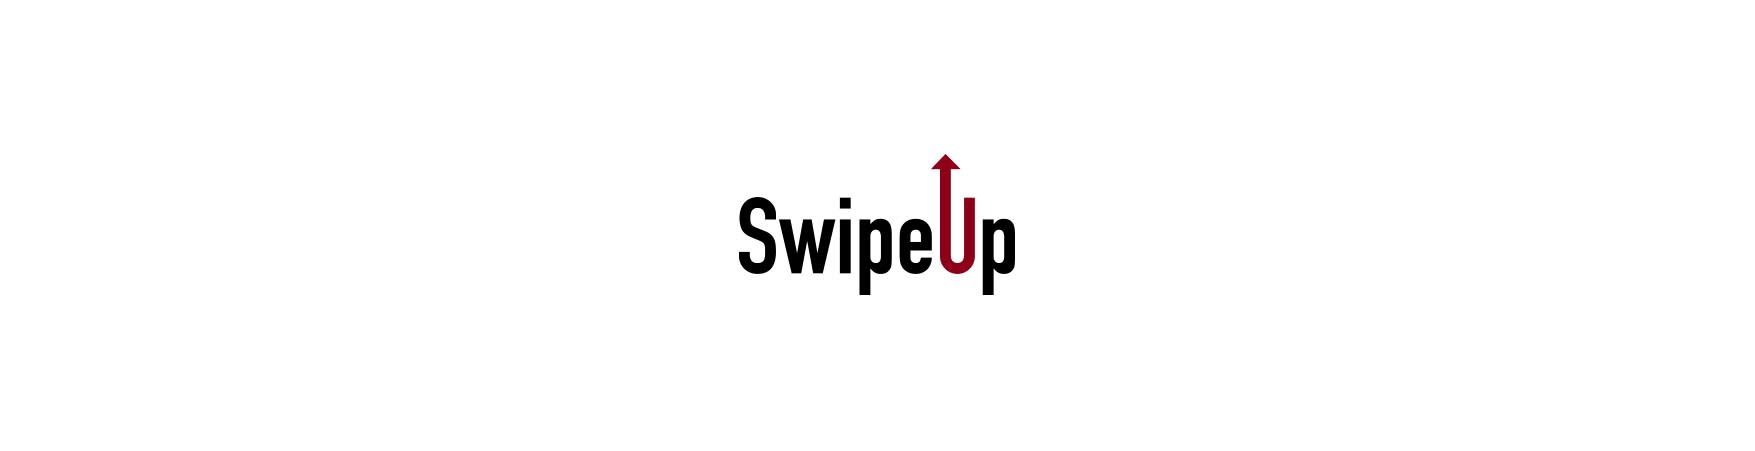 Swipe-Up